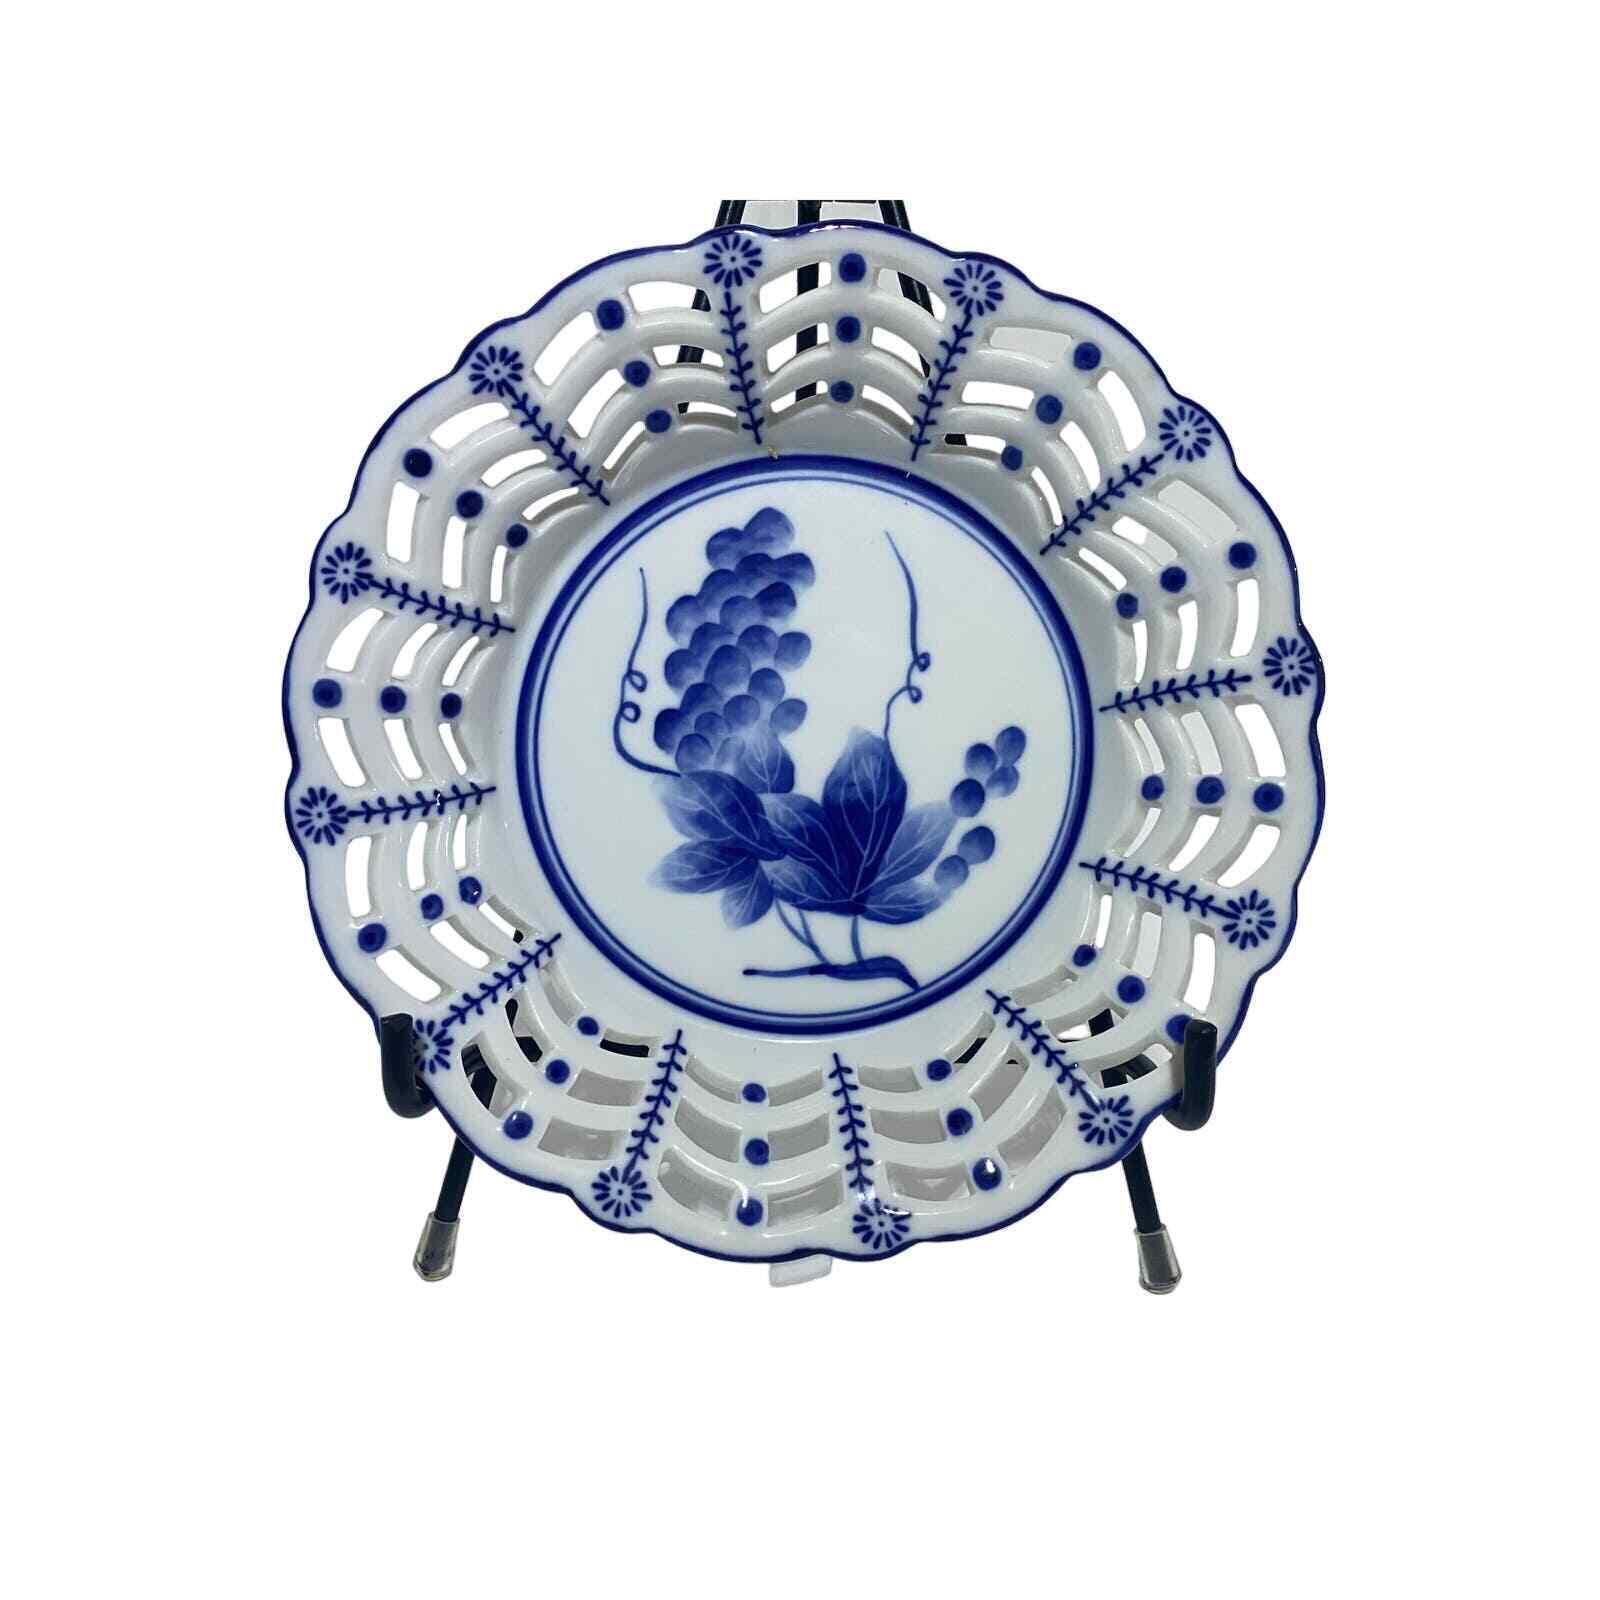 Jinding Breakthrough Serving Bowl Blue And White Decorative Vintage 8x1.5